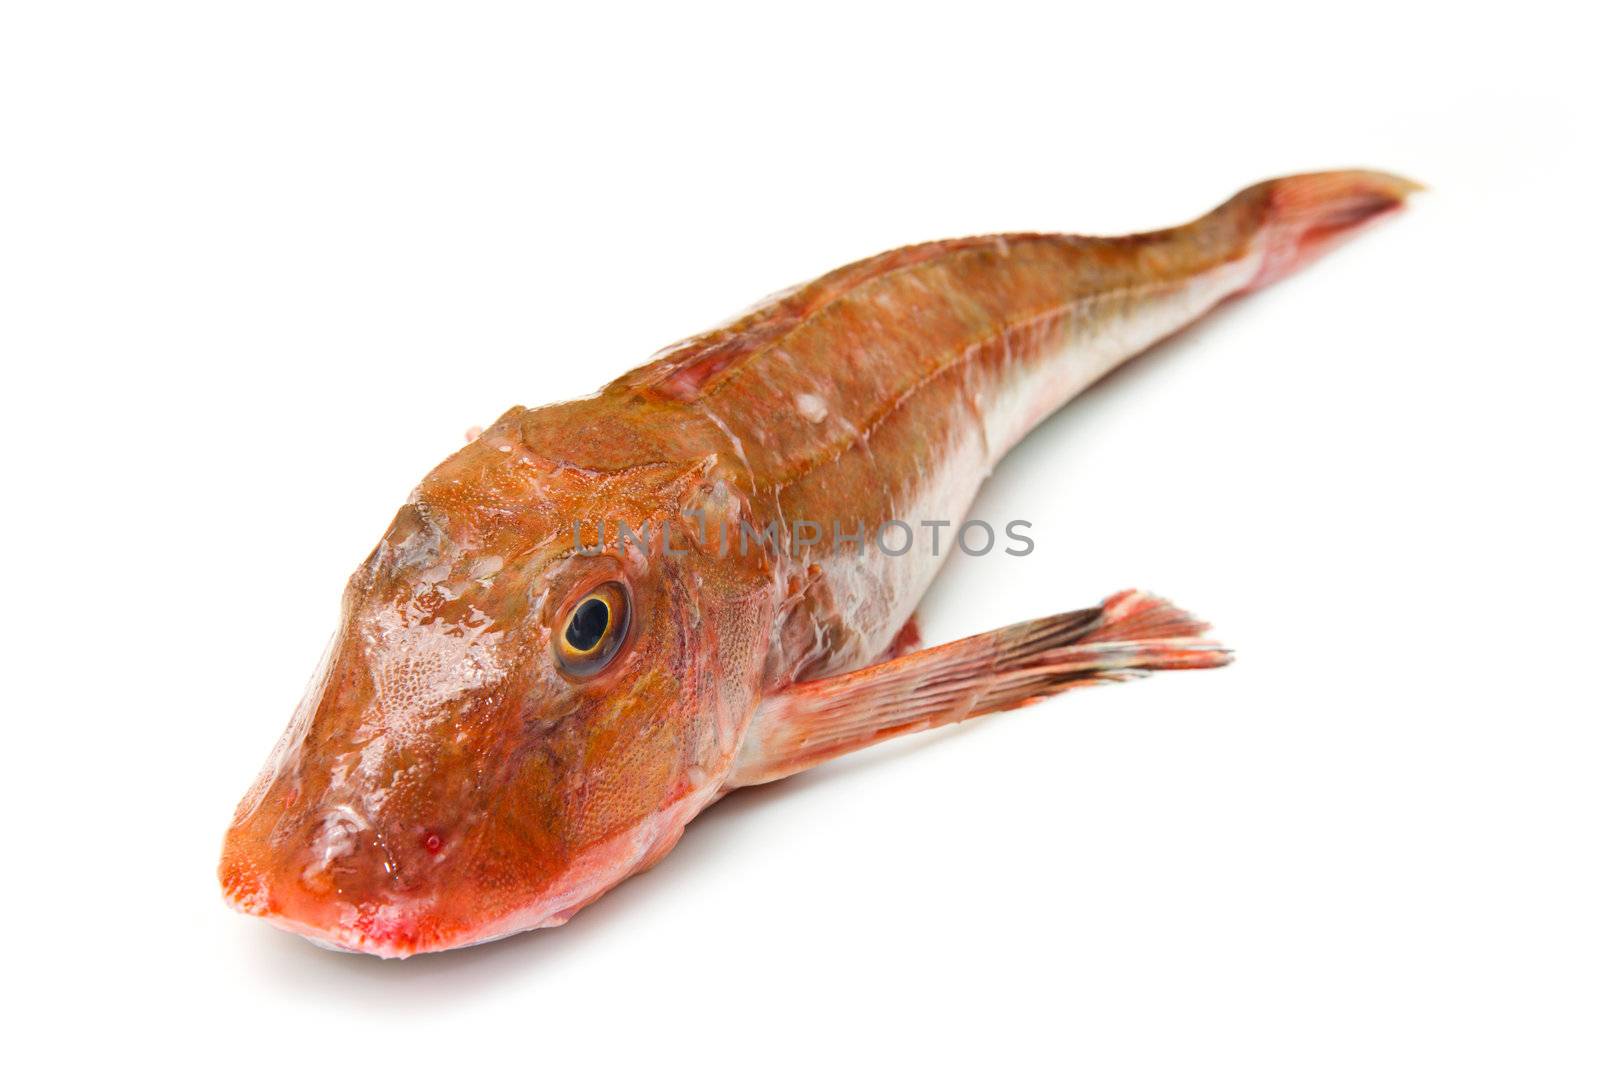 Redfish by lsantilli